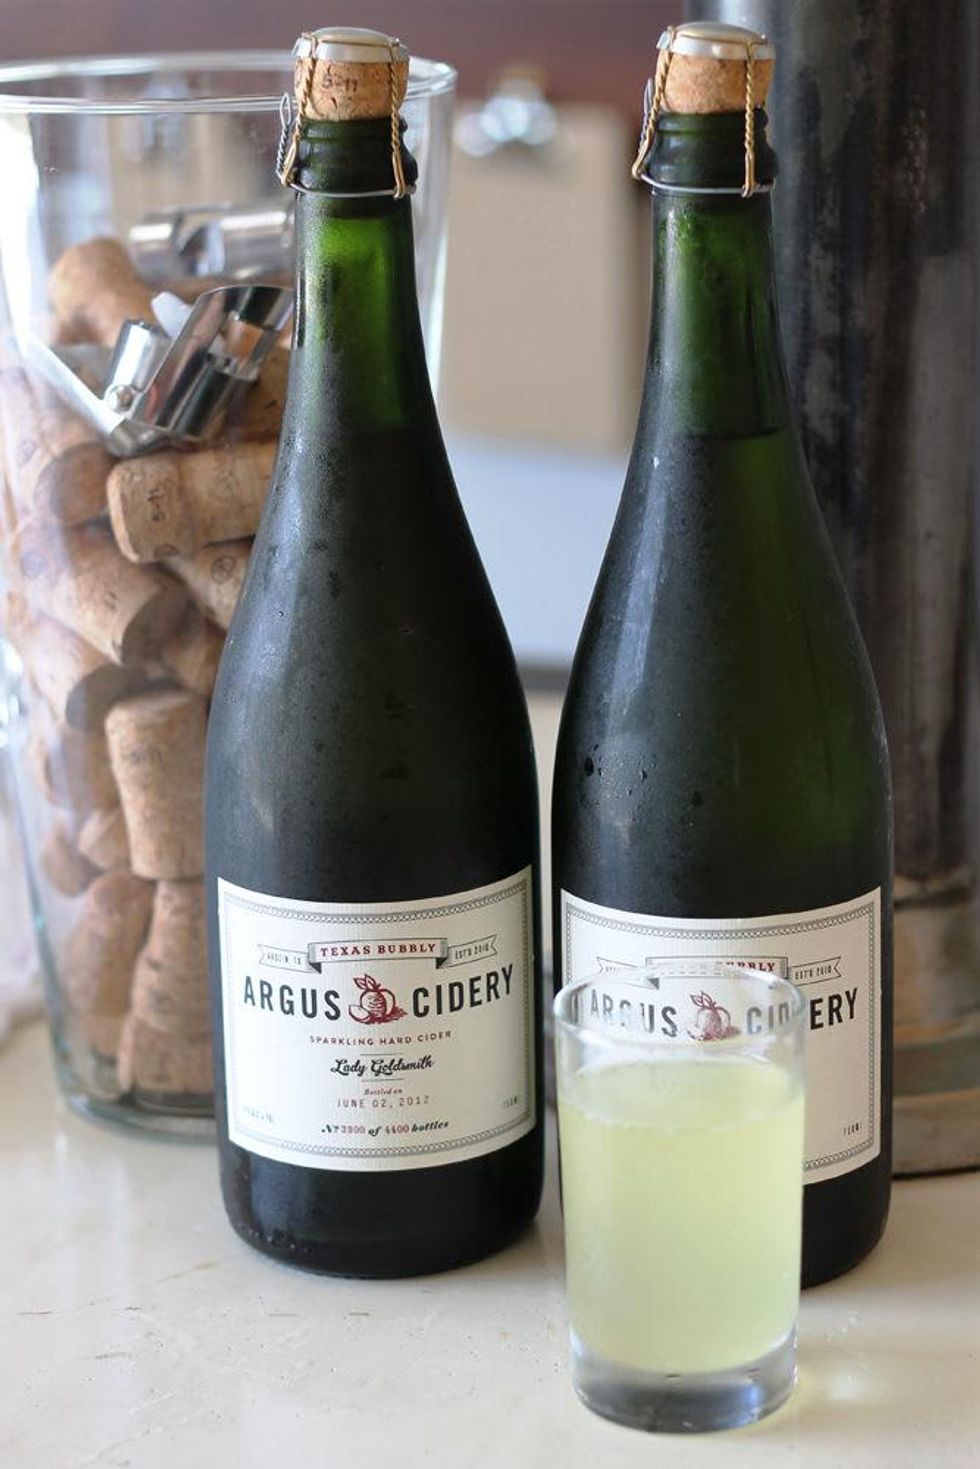 Argus Cider bottles